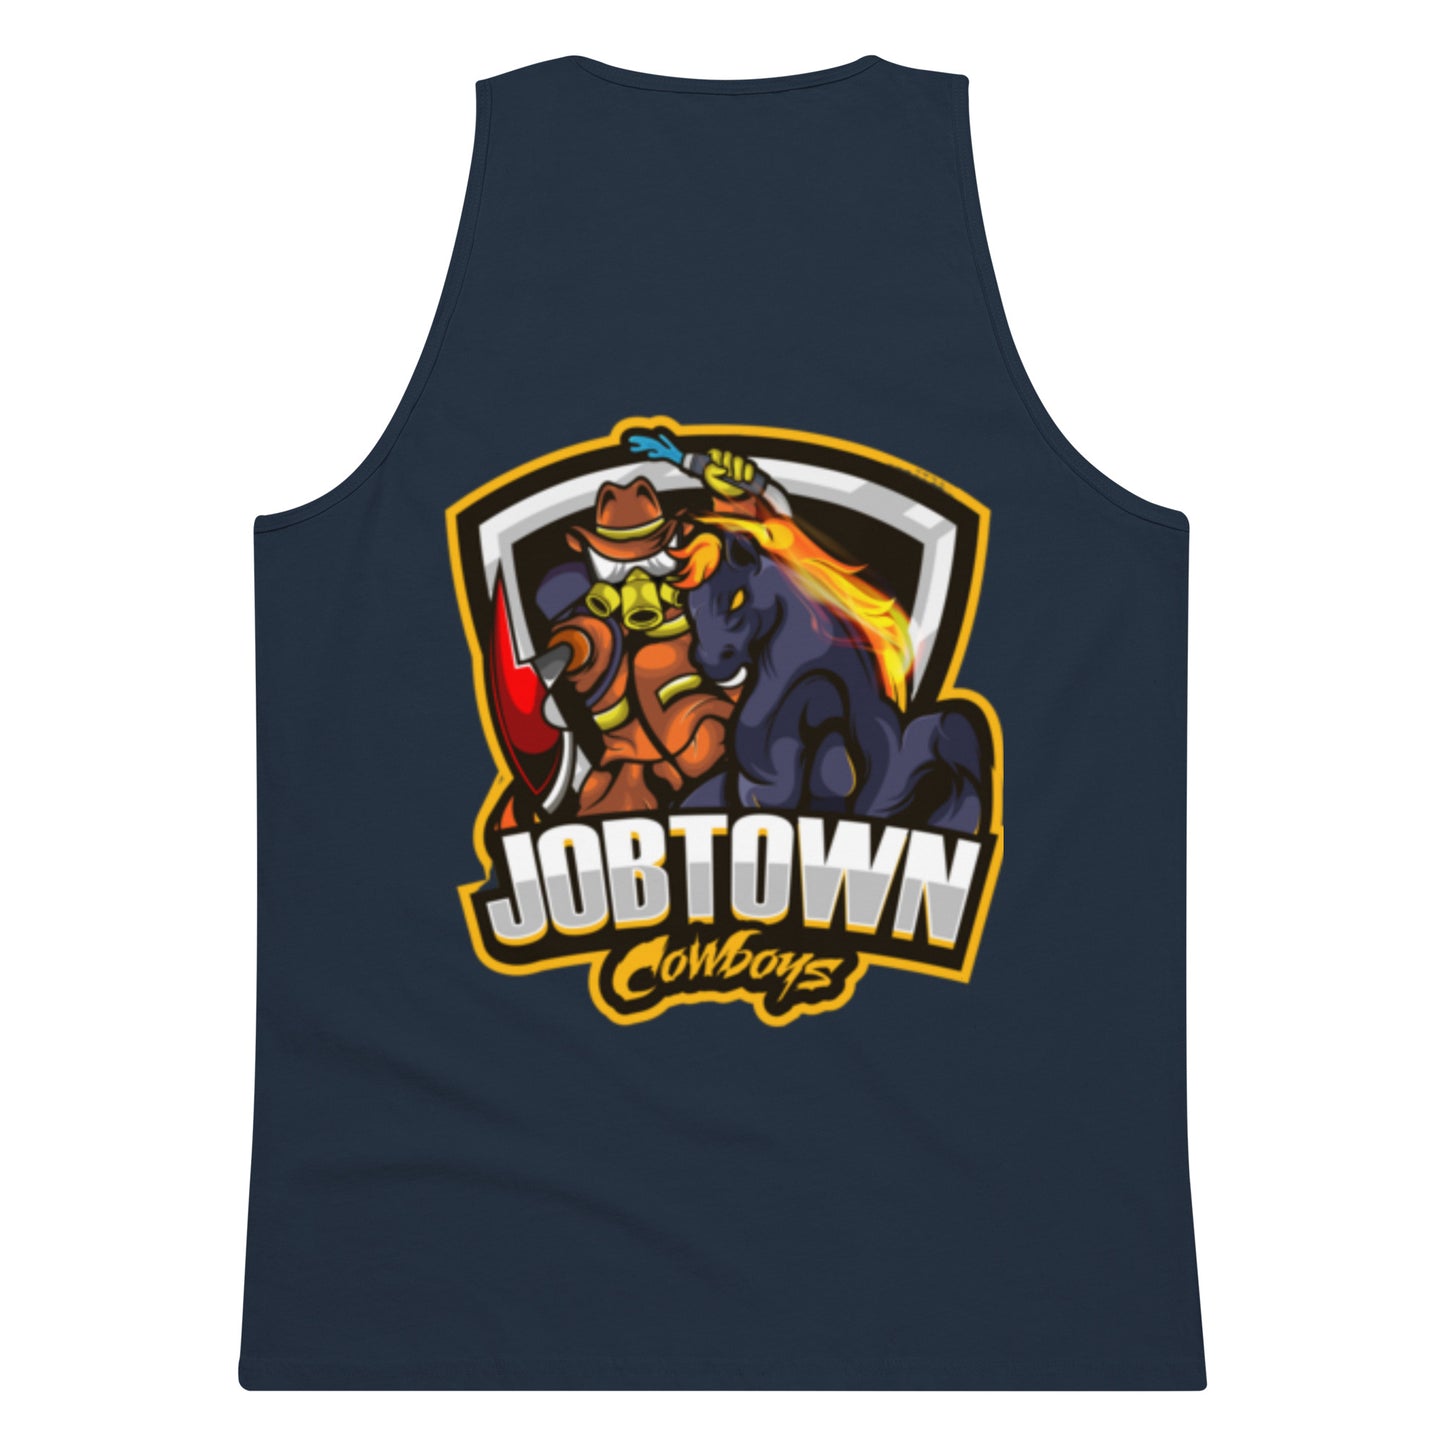 Jobtown Cowboys Firefighter Premium Tank Top- The Original Design